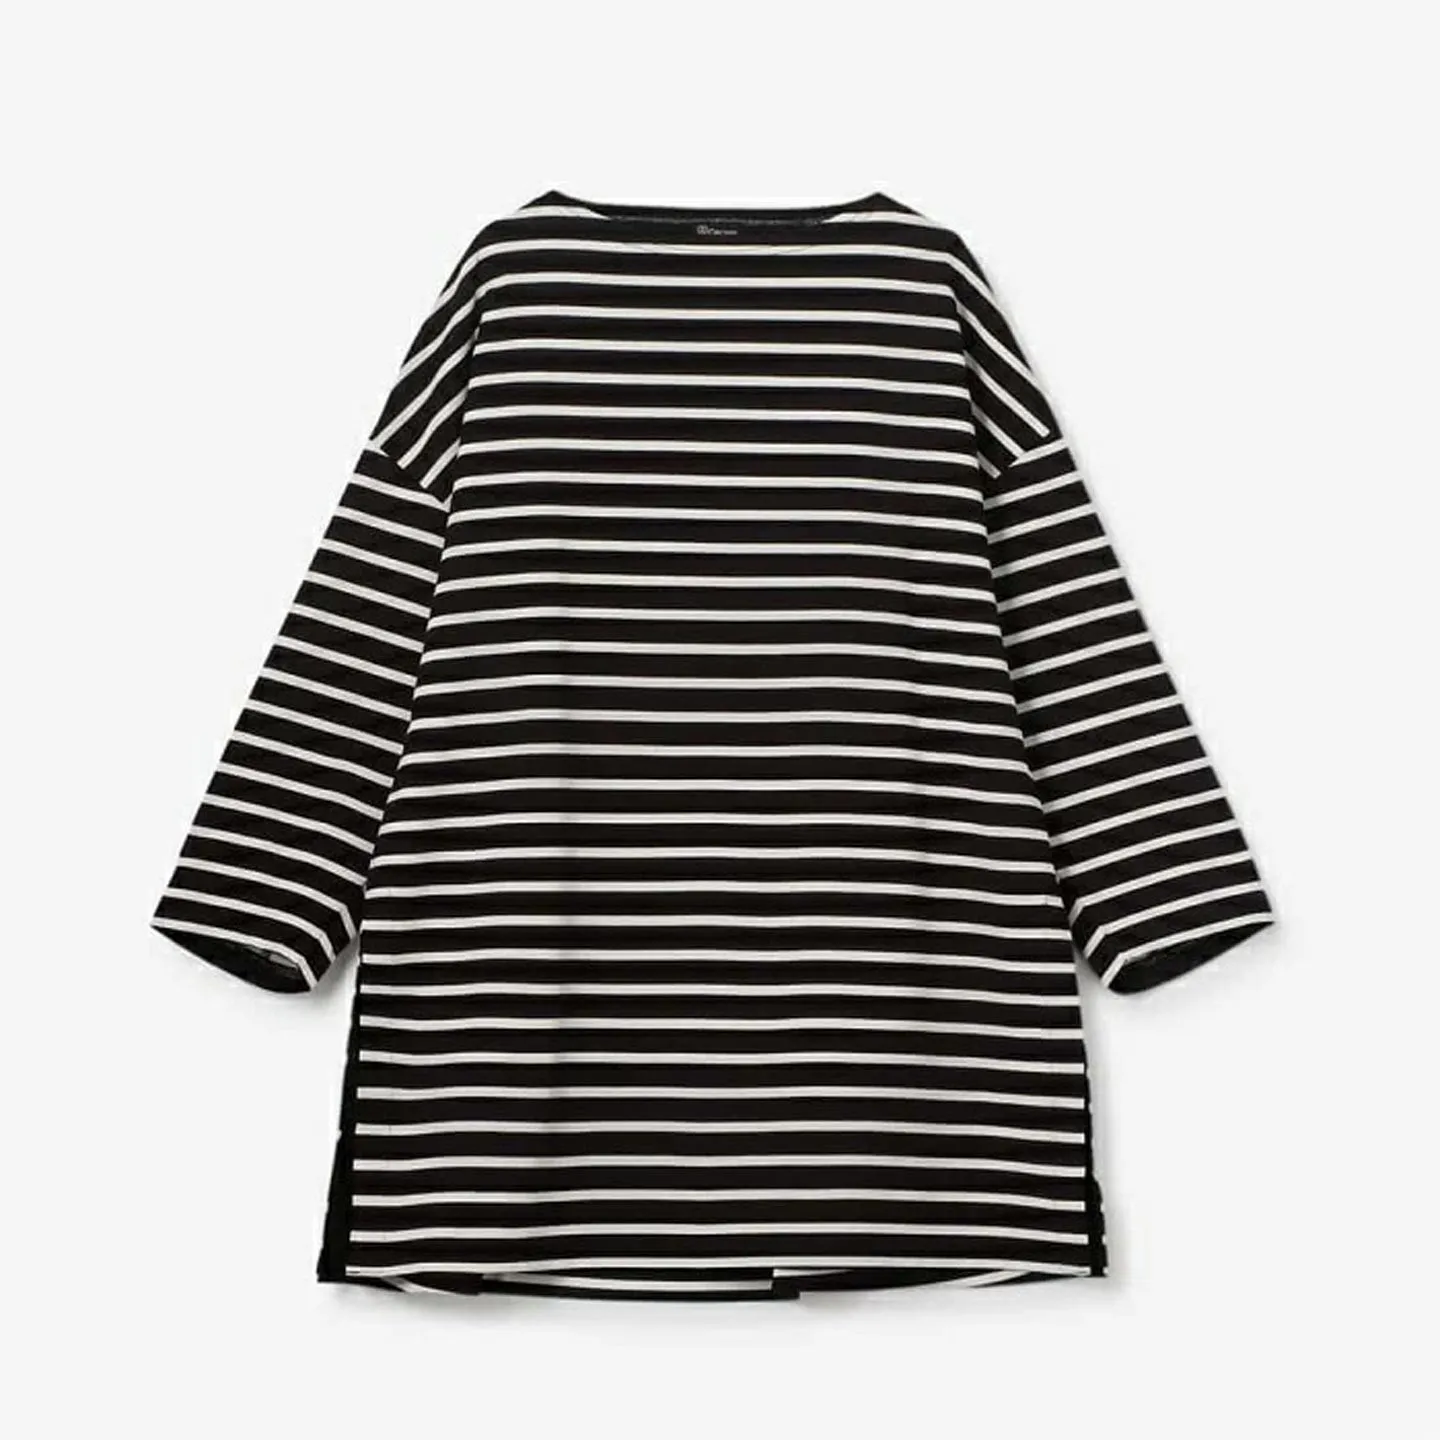 Long Striped shirt, Boat Neck, Black / White Orcival #OR-C0139 MER